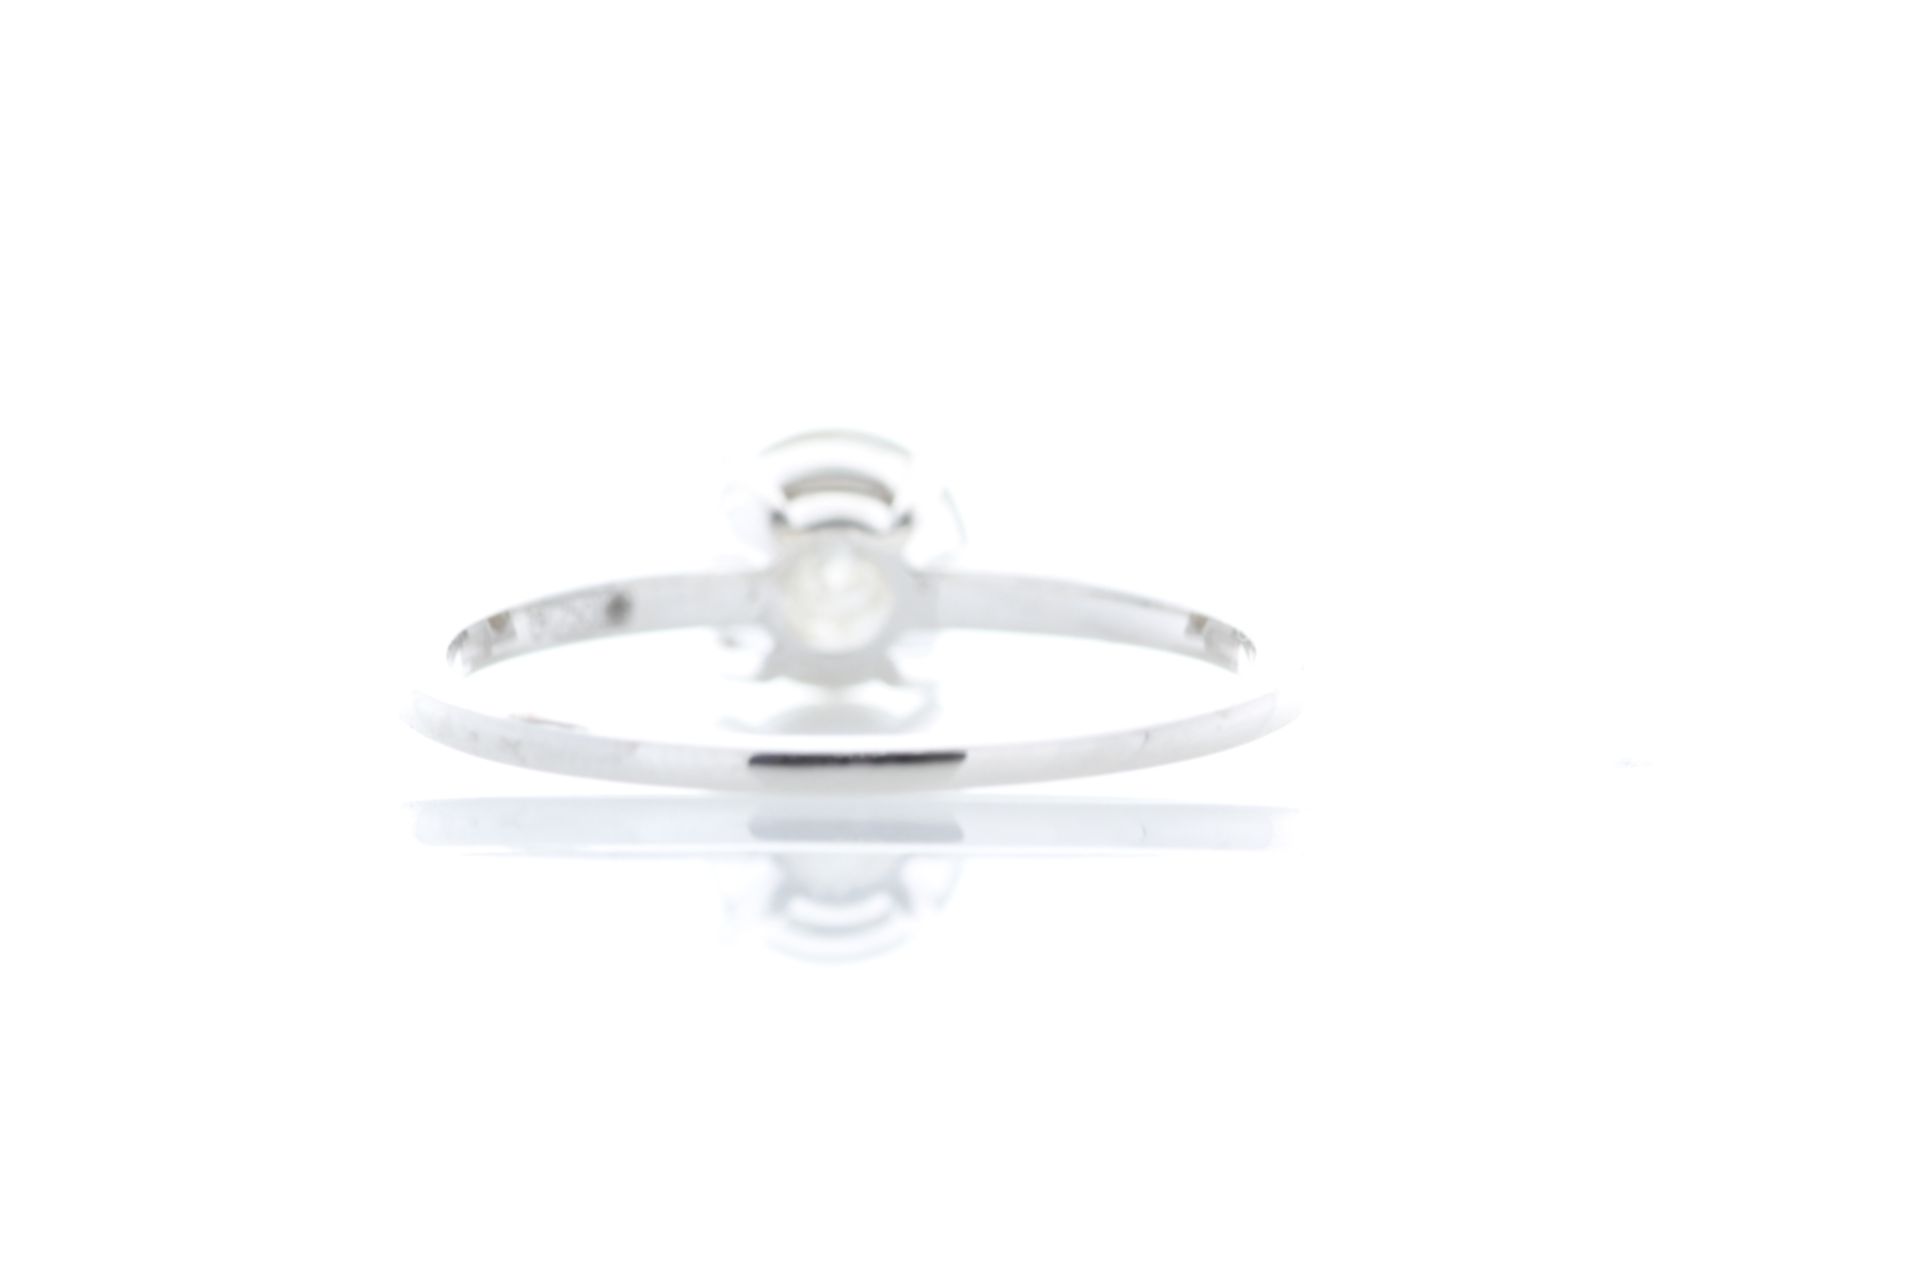 18ct White Gold Single Stone Prong Set With Stone Set Shoulders Diamond Ring 1.05 Carats - Image 3 of 5